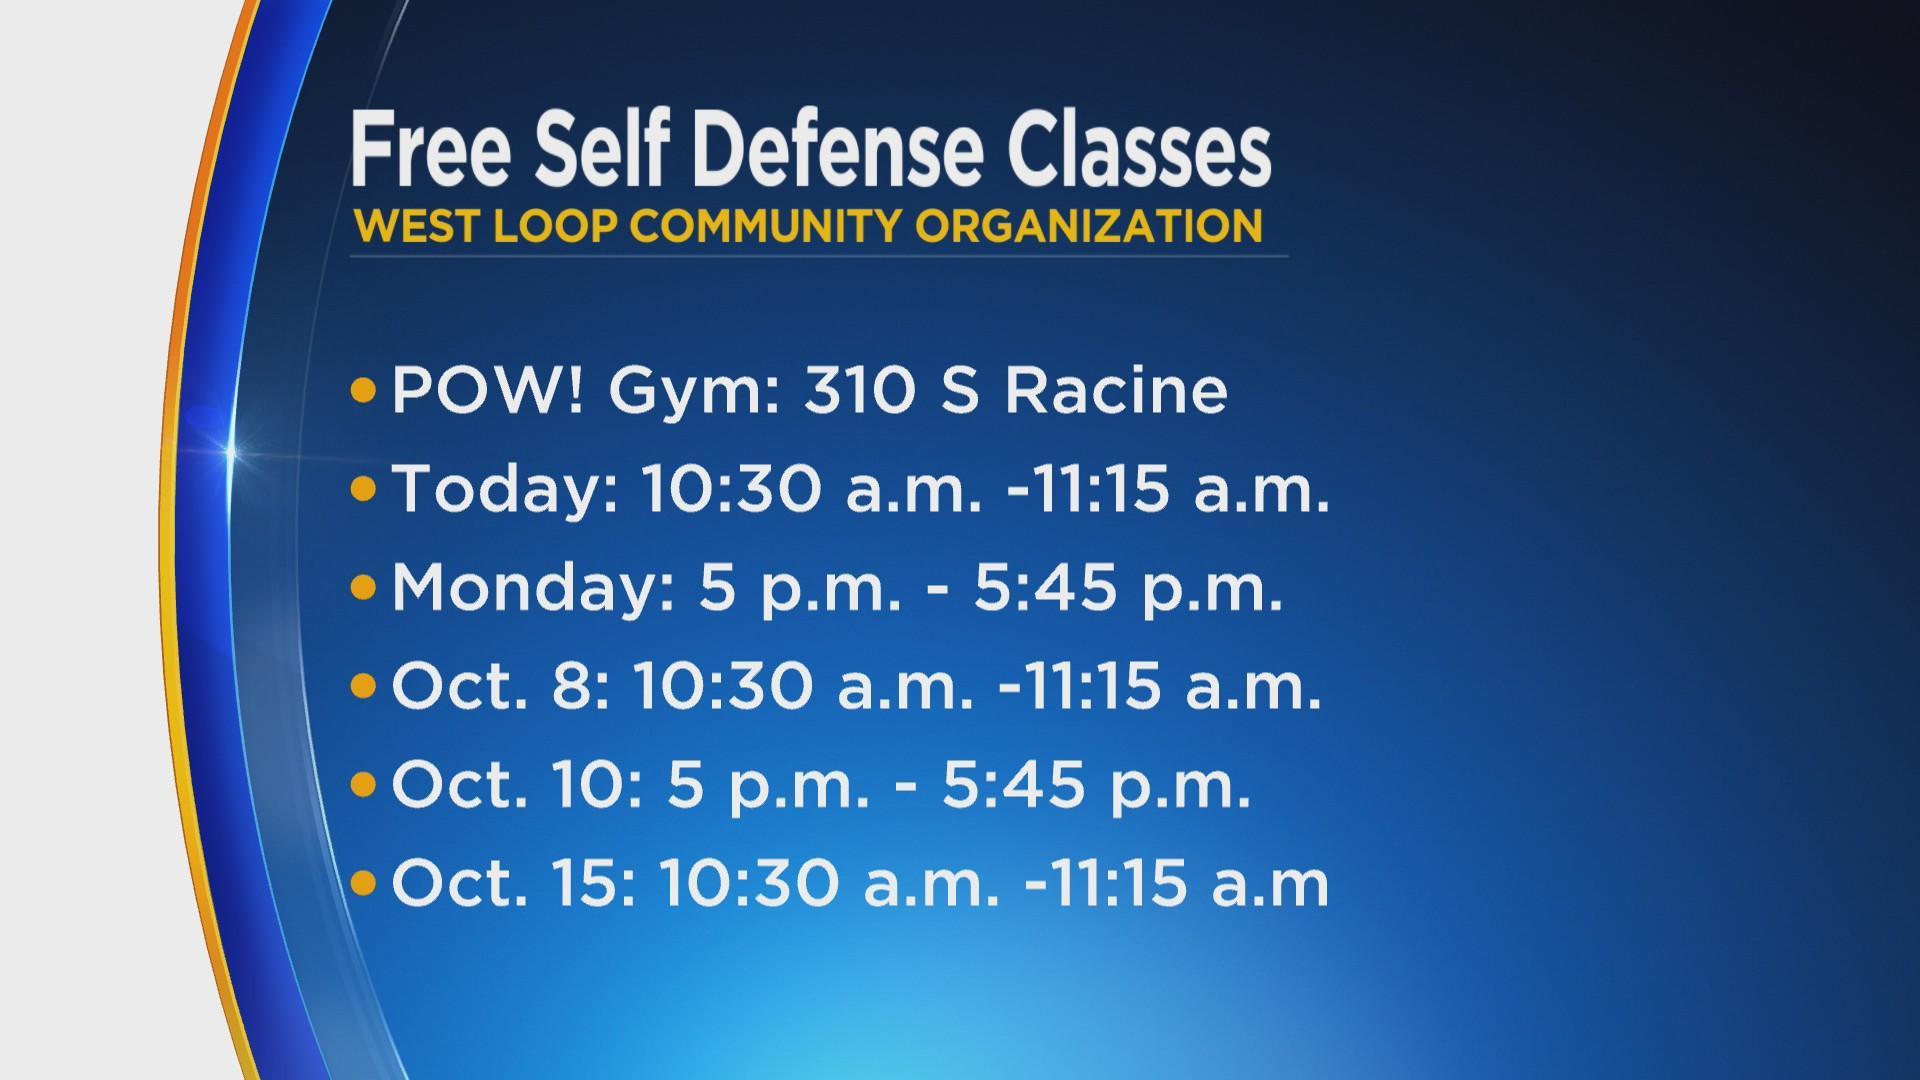 West Loop Community Organization hosting free Self-defense classes - CBS  Chicago